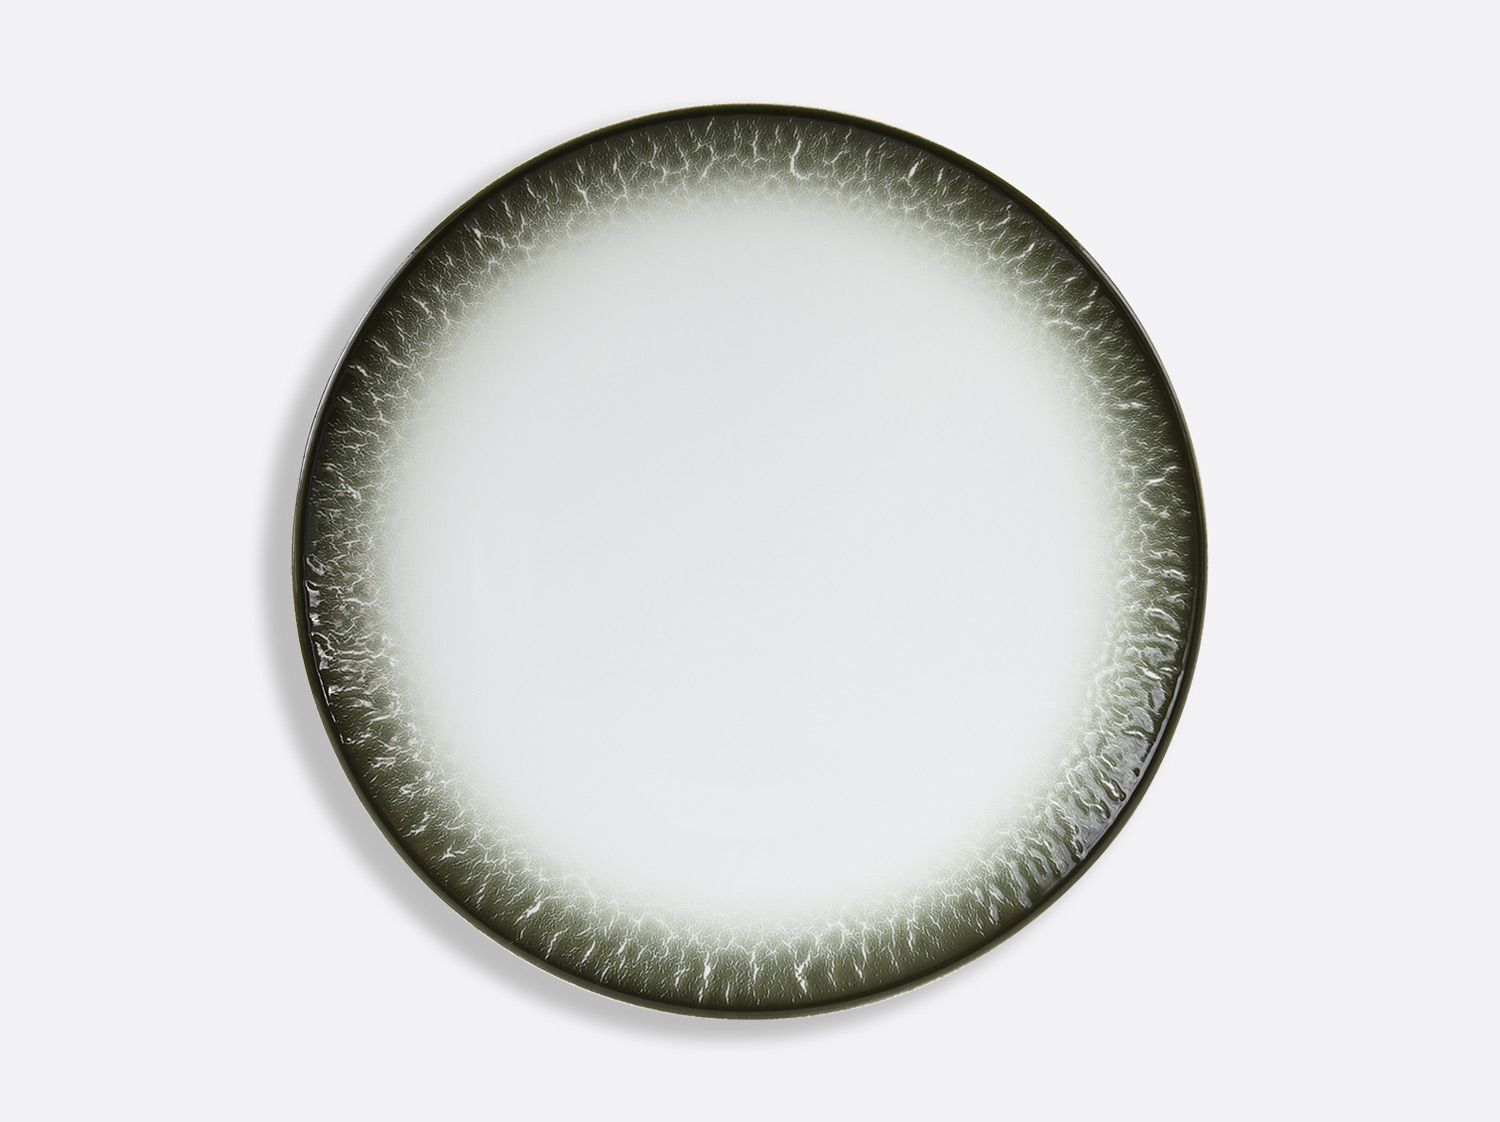 China Ultra flat plate 11.6" of the collection TERRA LICHEN | Bernardaud